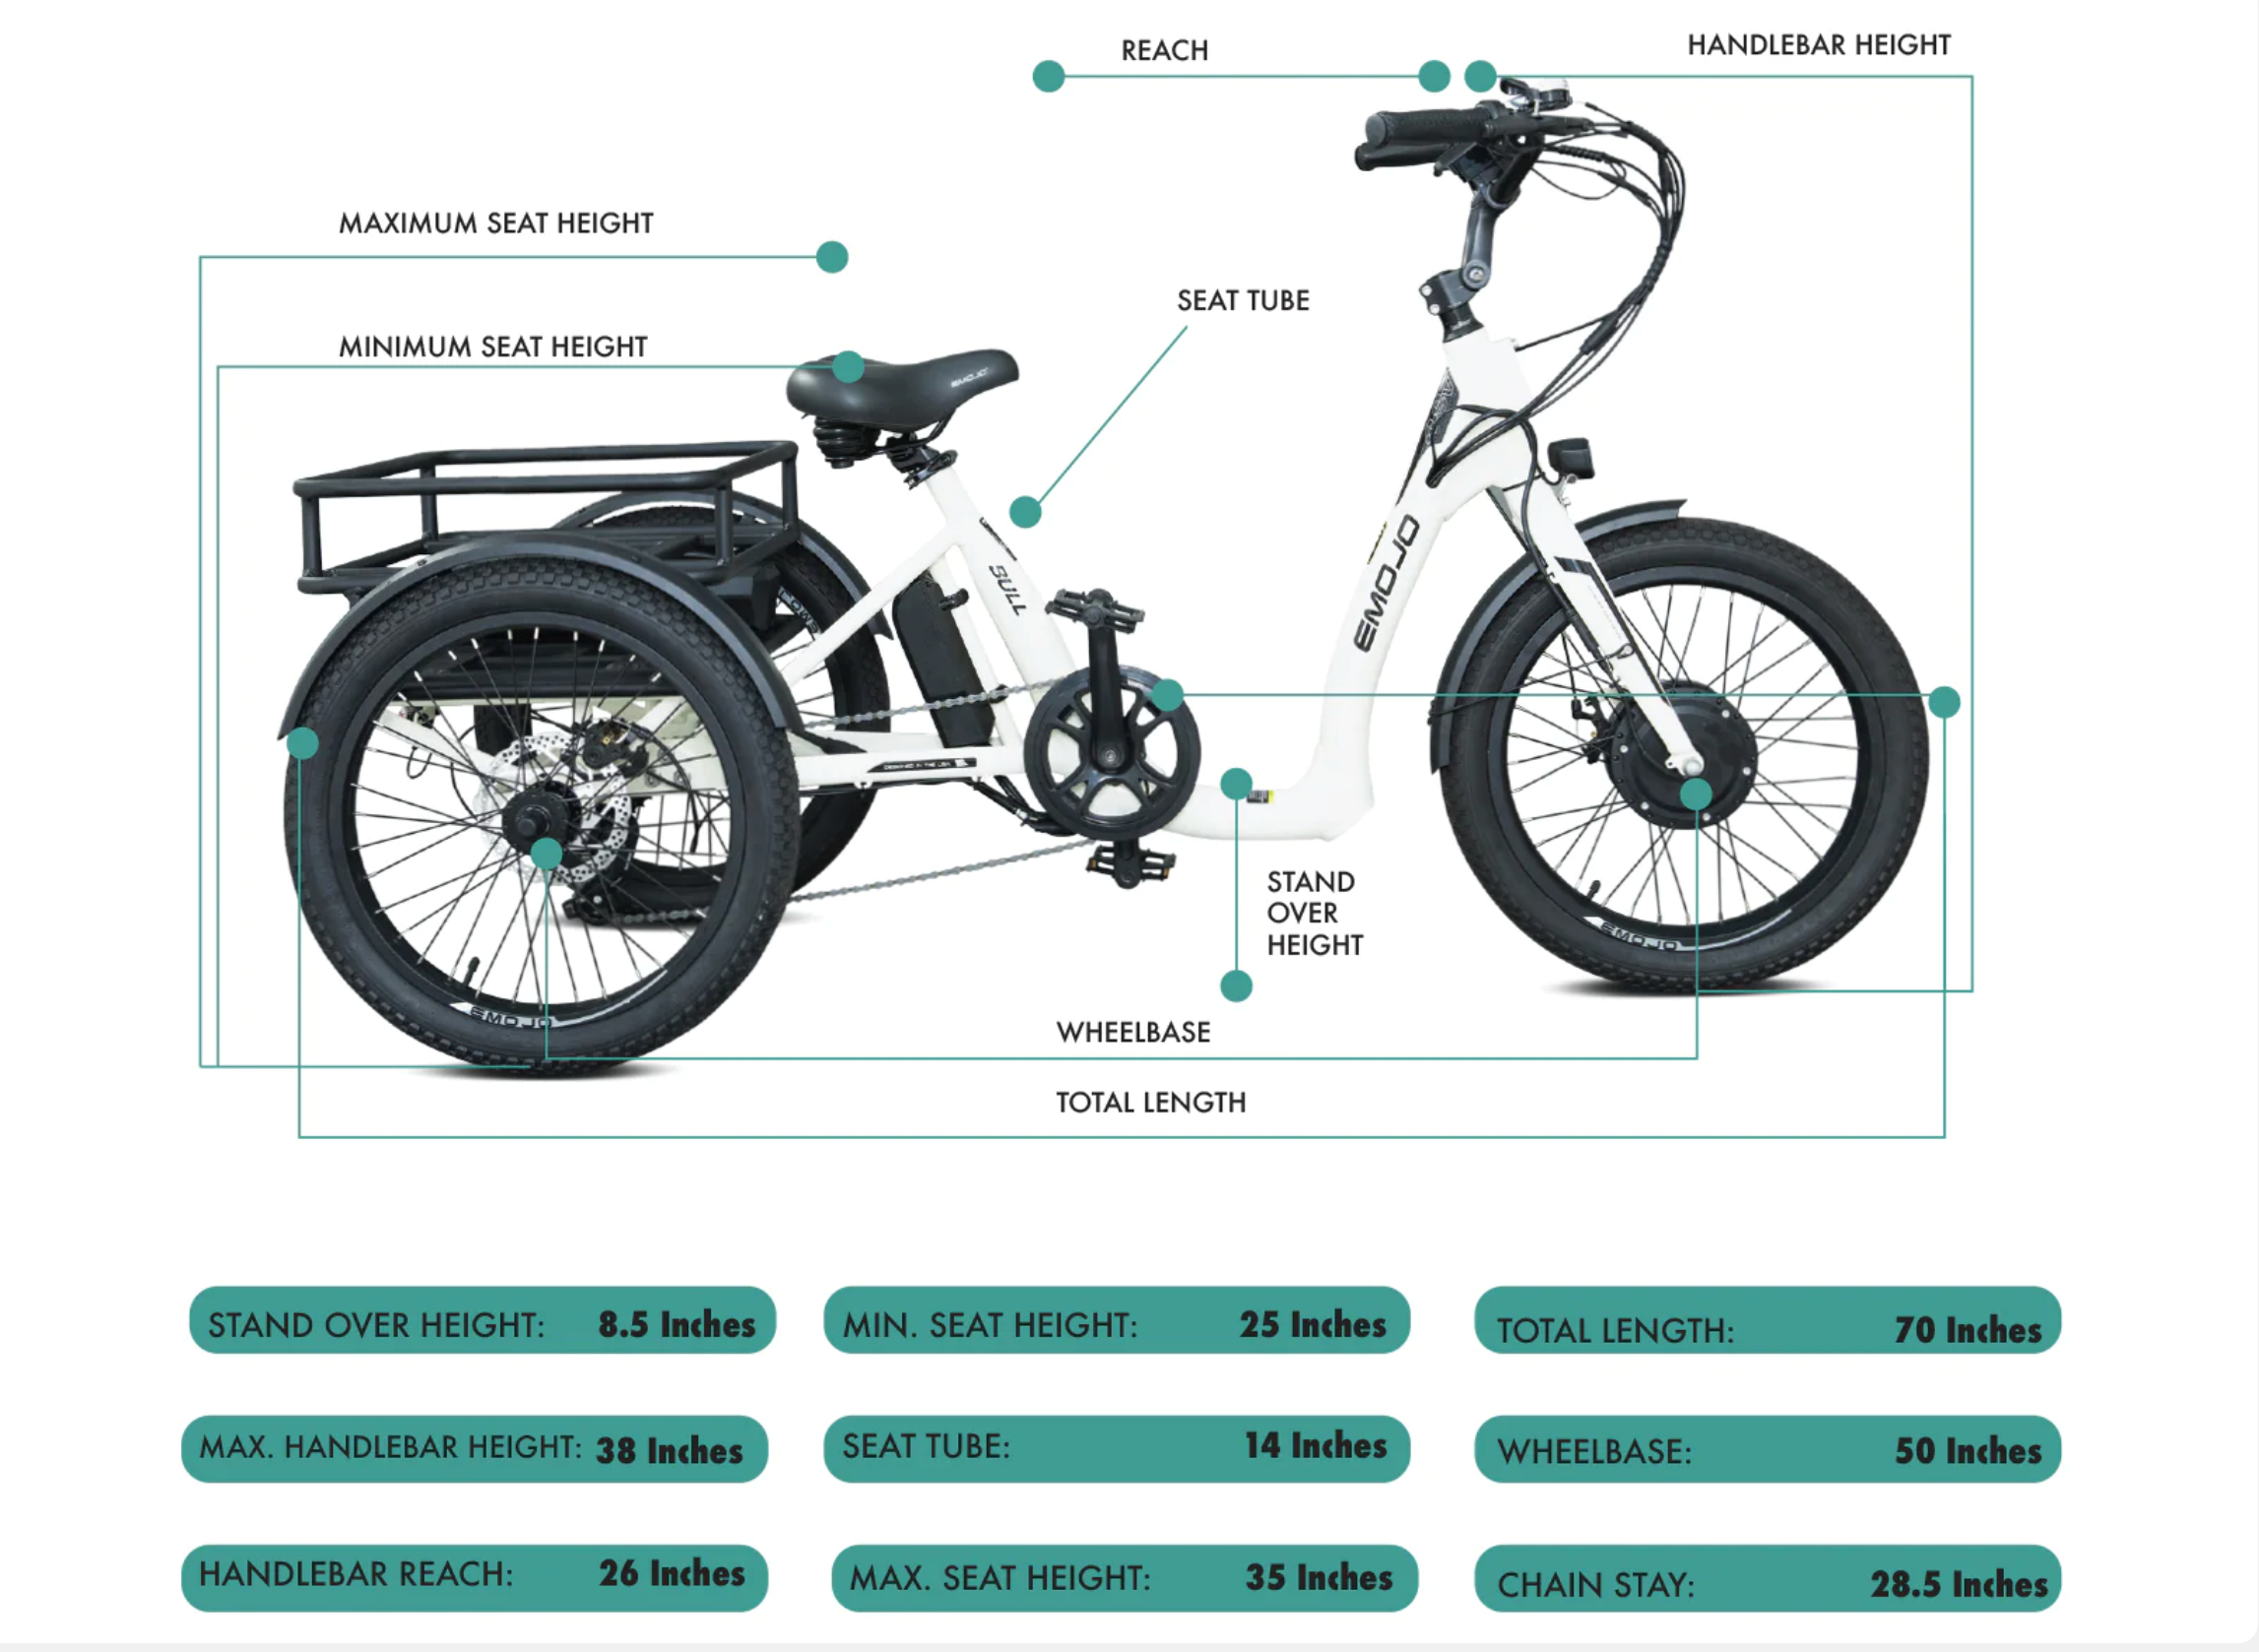 Emojo Bull Electric Trike Bike BONUS Gifts